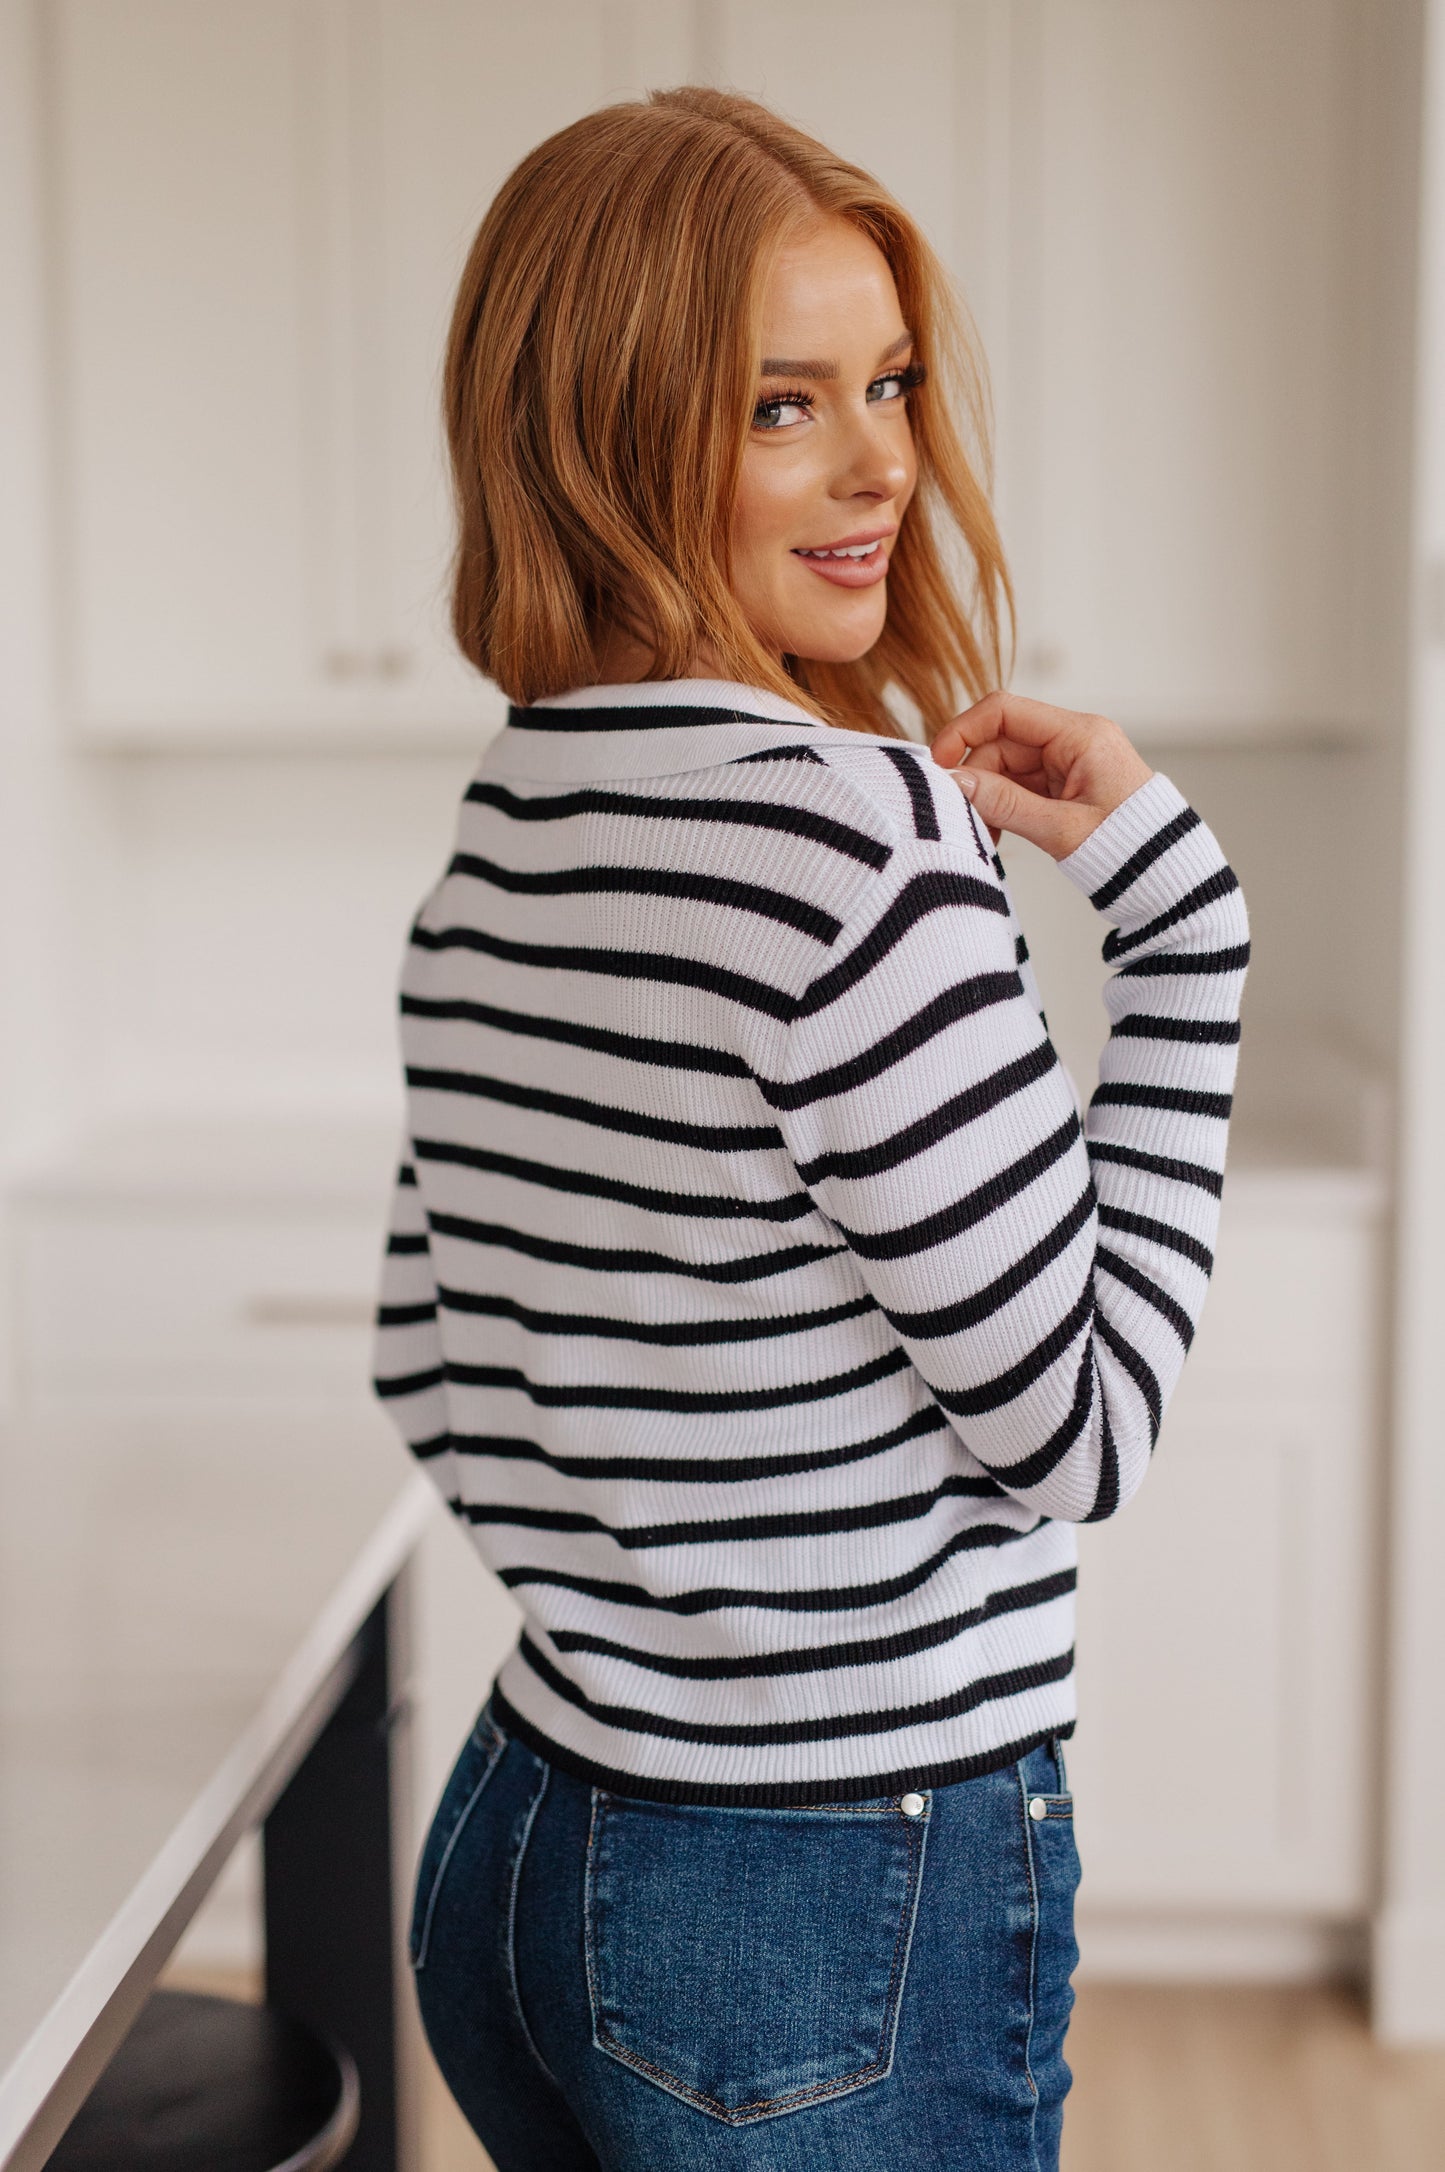 Self Improvement V-Neck Striped Sweater - Southern Divas Boutique